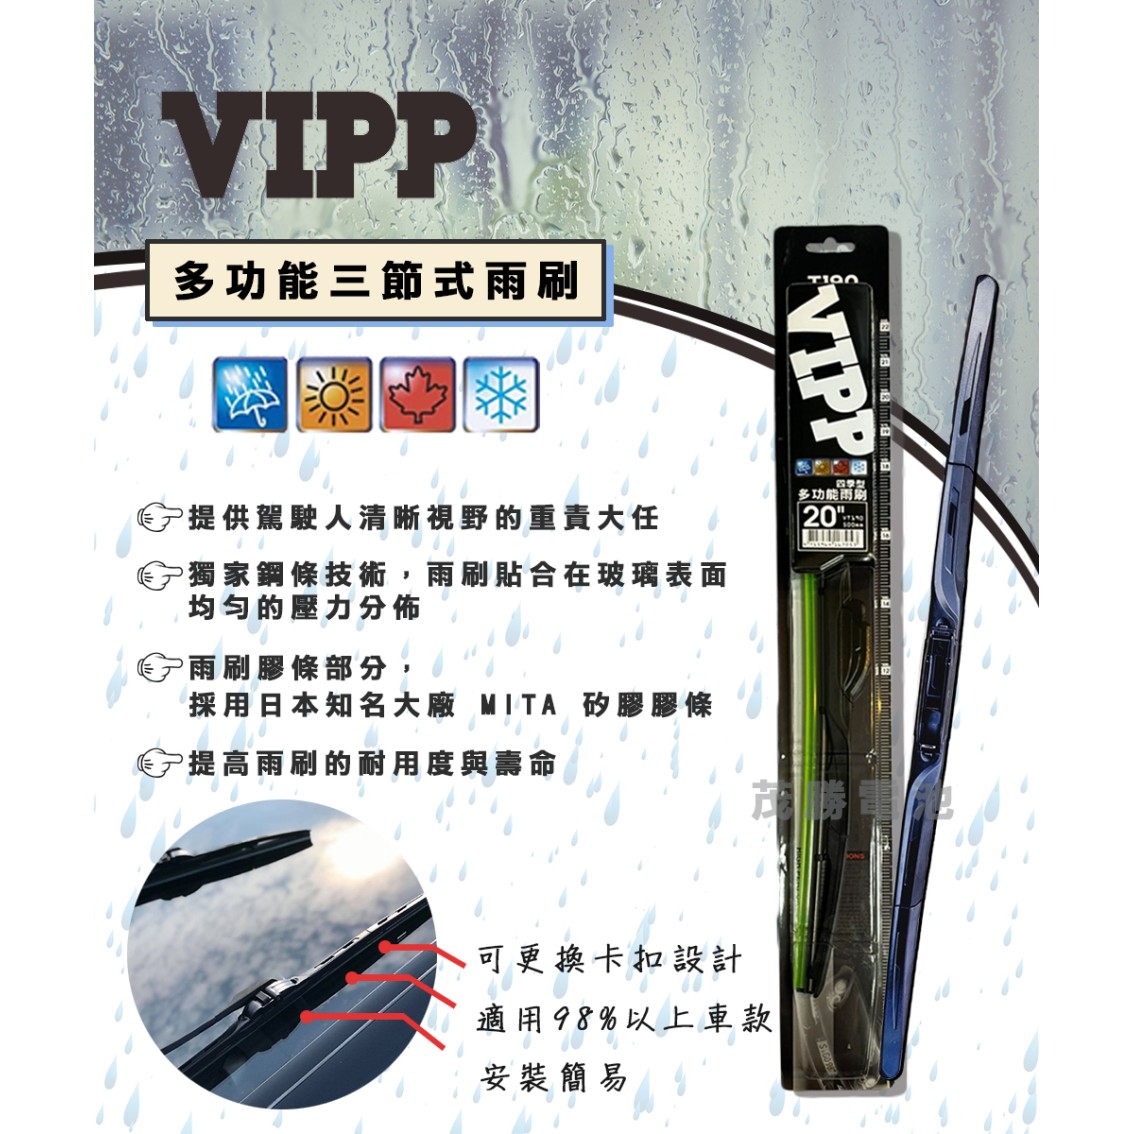 VIPP 多功能三節式雨刷